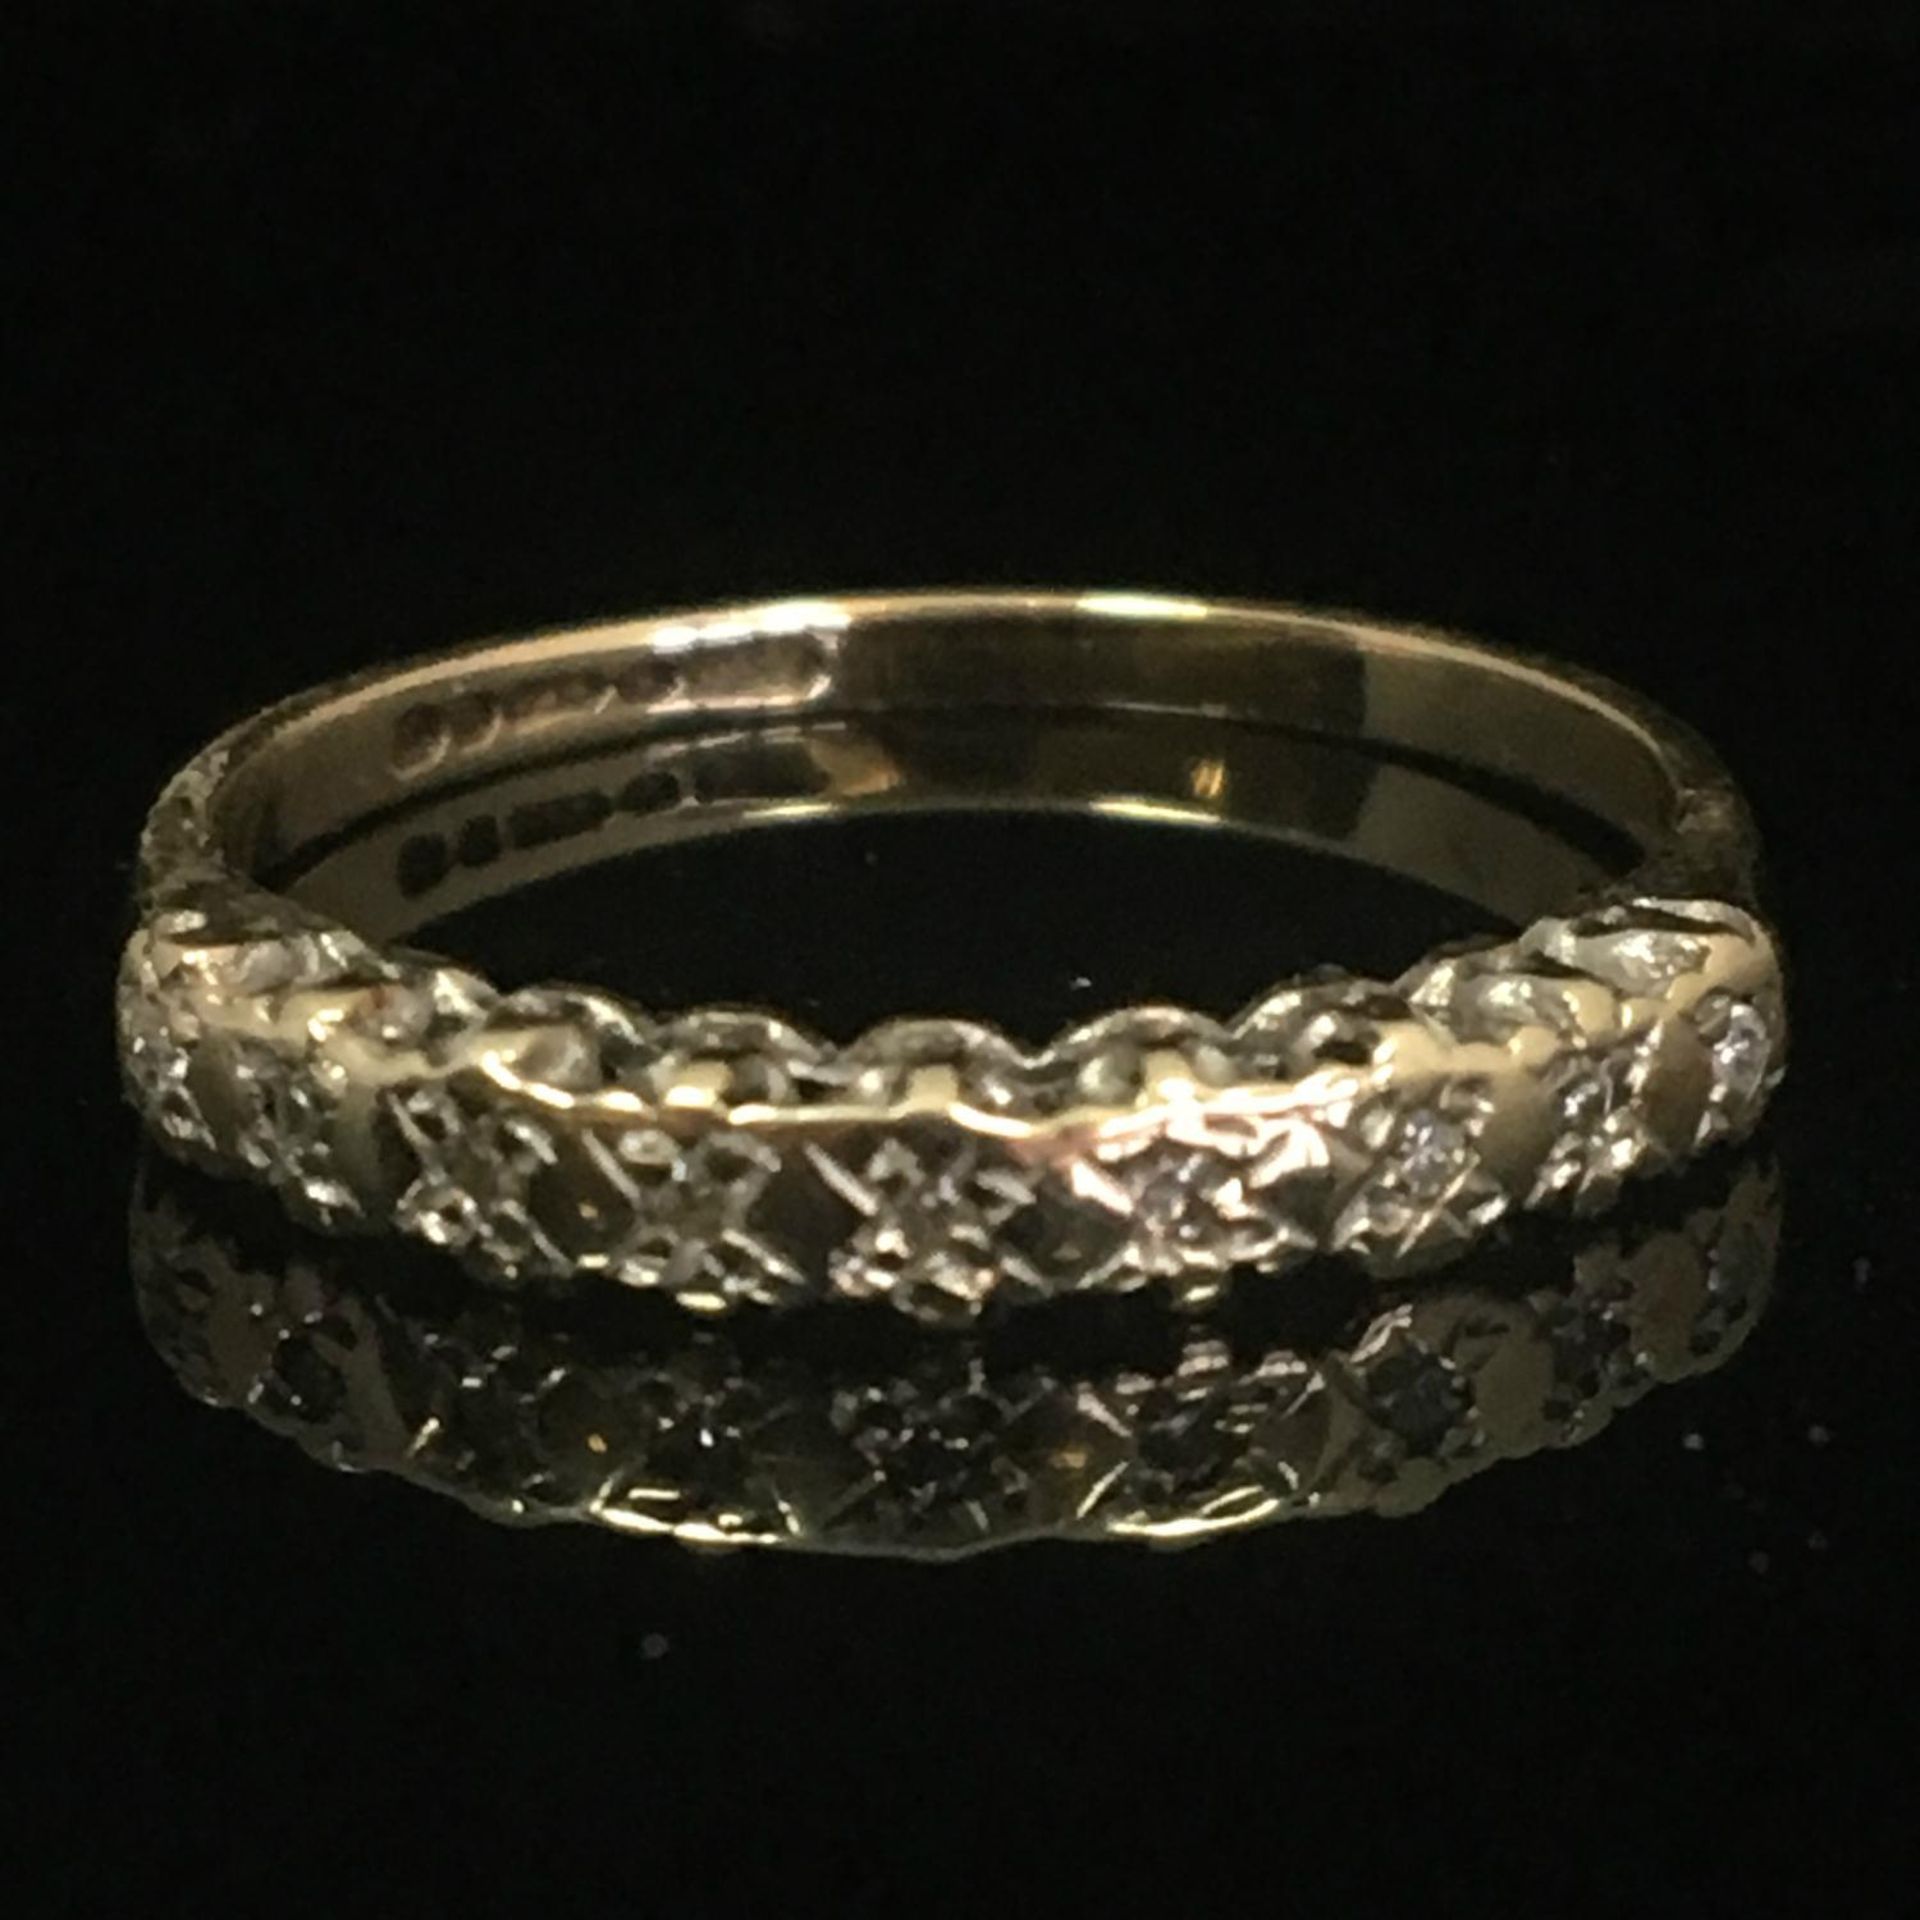 9ct gold diamond half eternity ring, London hallmarks c1989. Nine cut diamonds in illusion bead